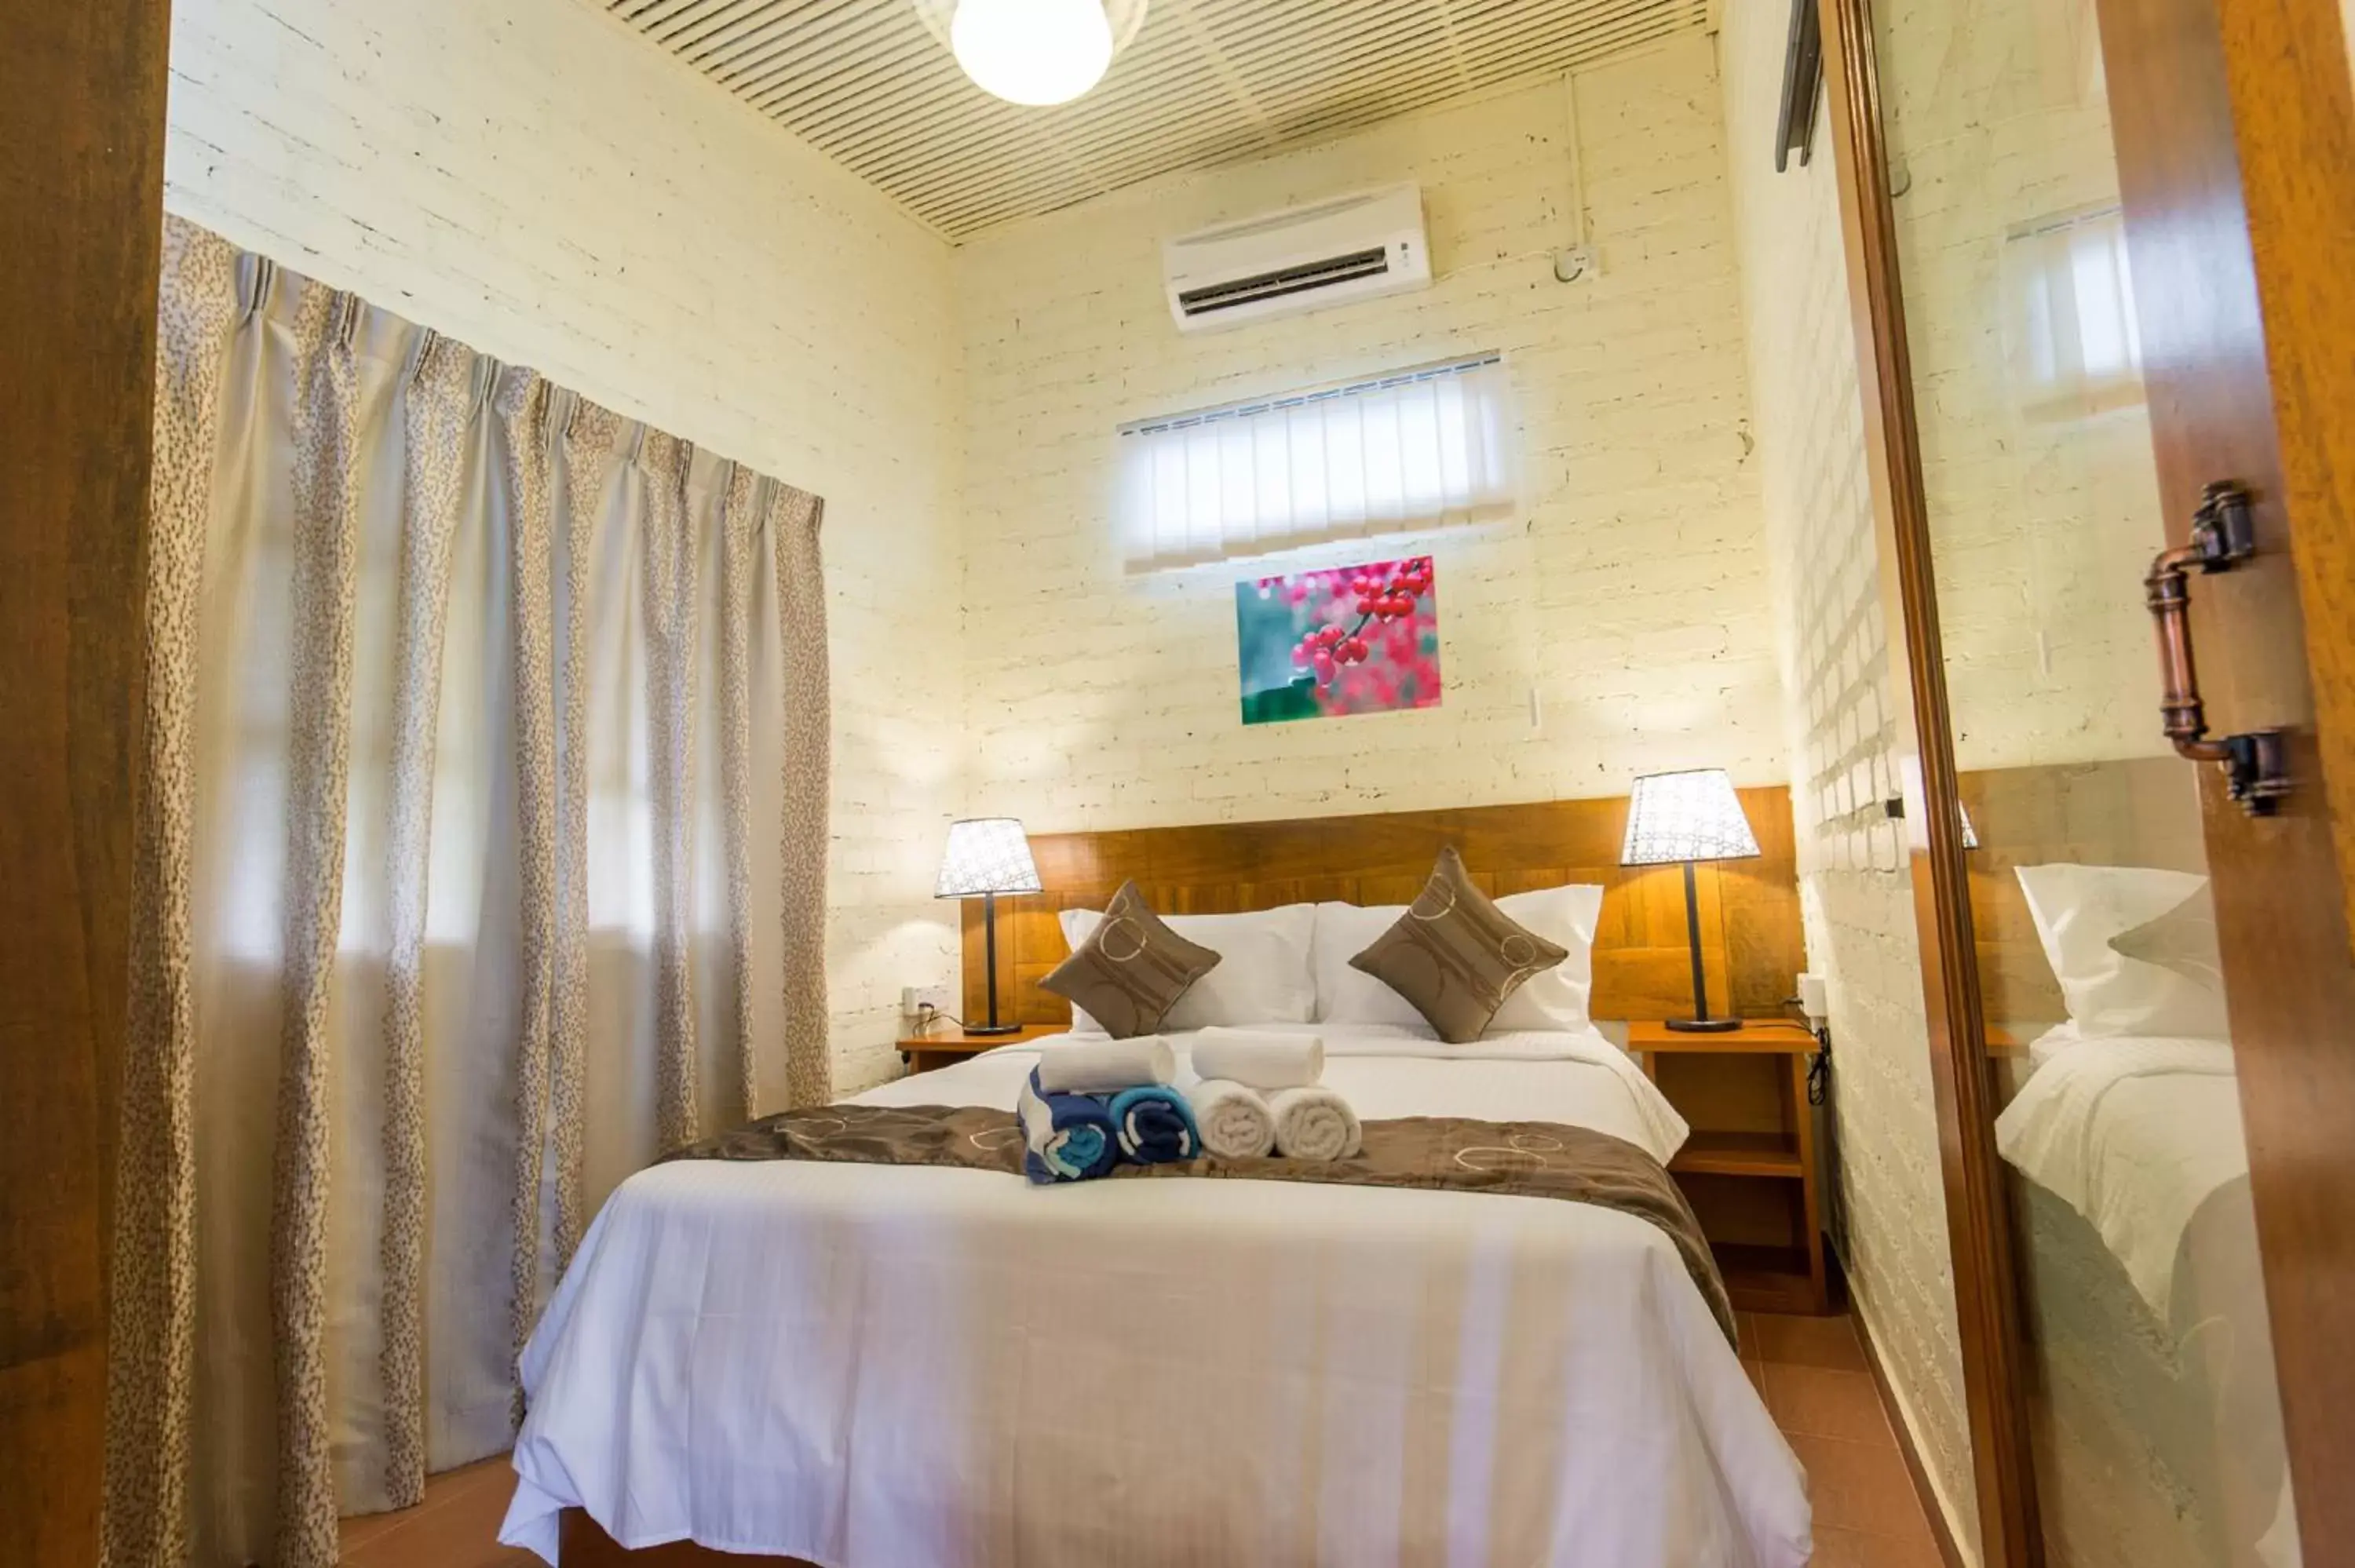 bunk bed, Room Photo in The Ocean Residence Langkawi